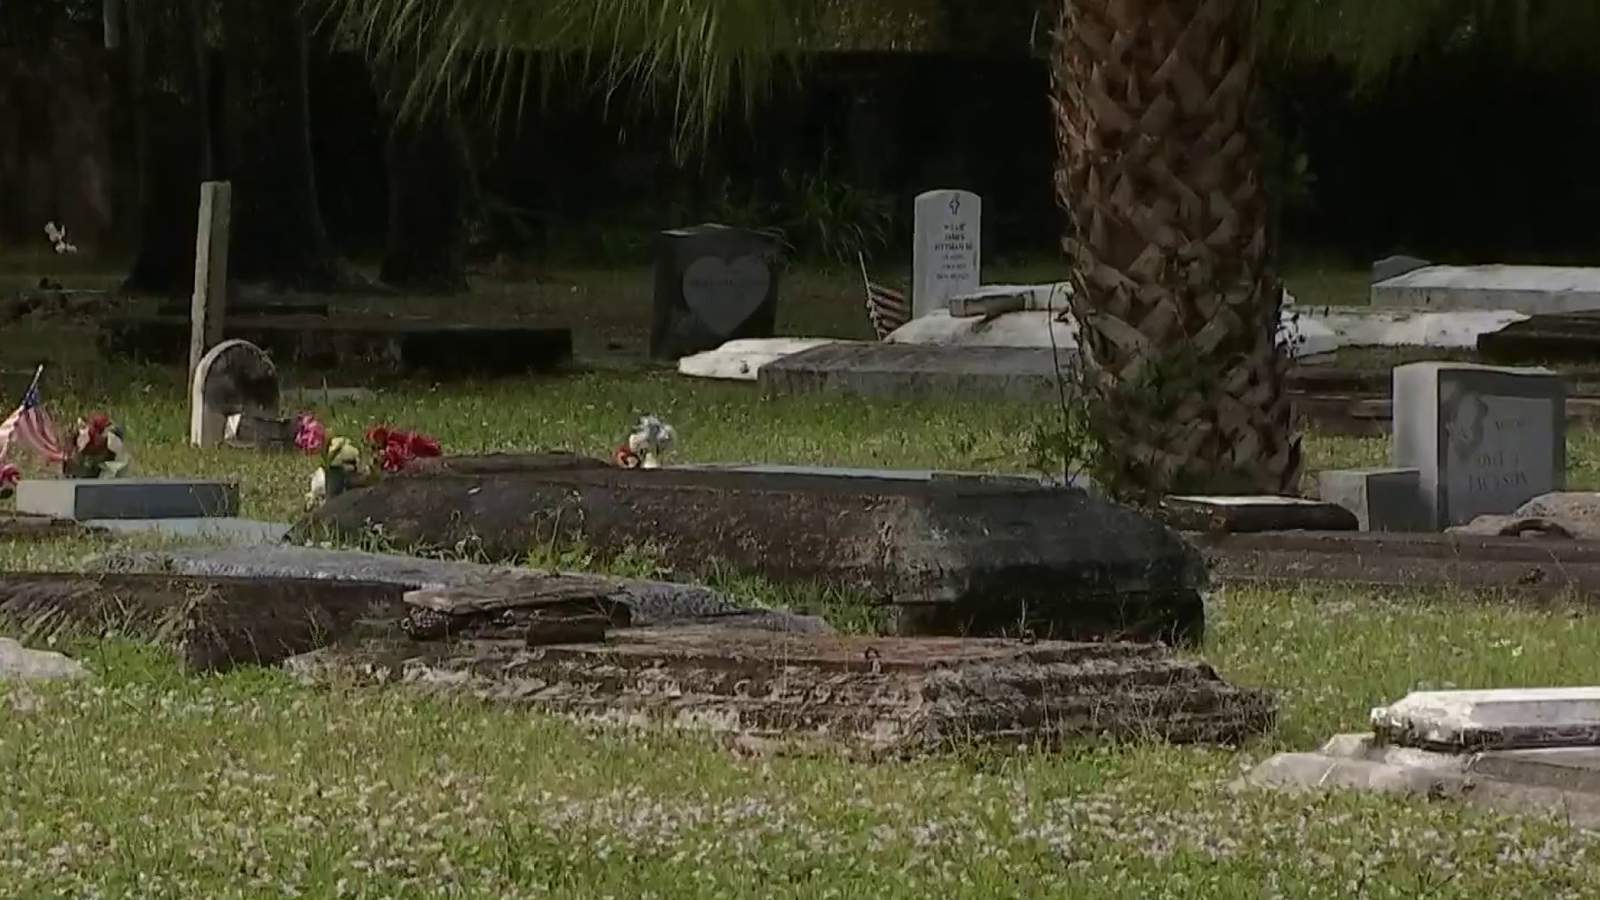 Group restores neglected cemeteries, restores honor to fallen veterans